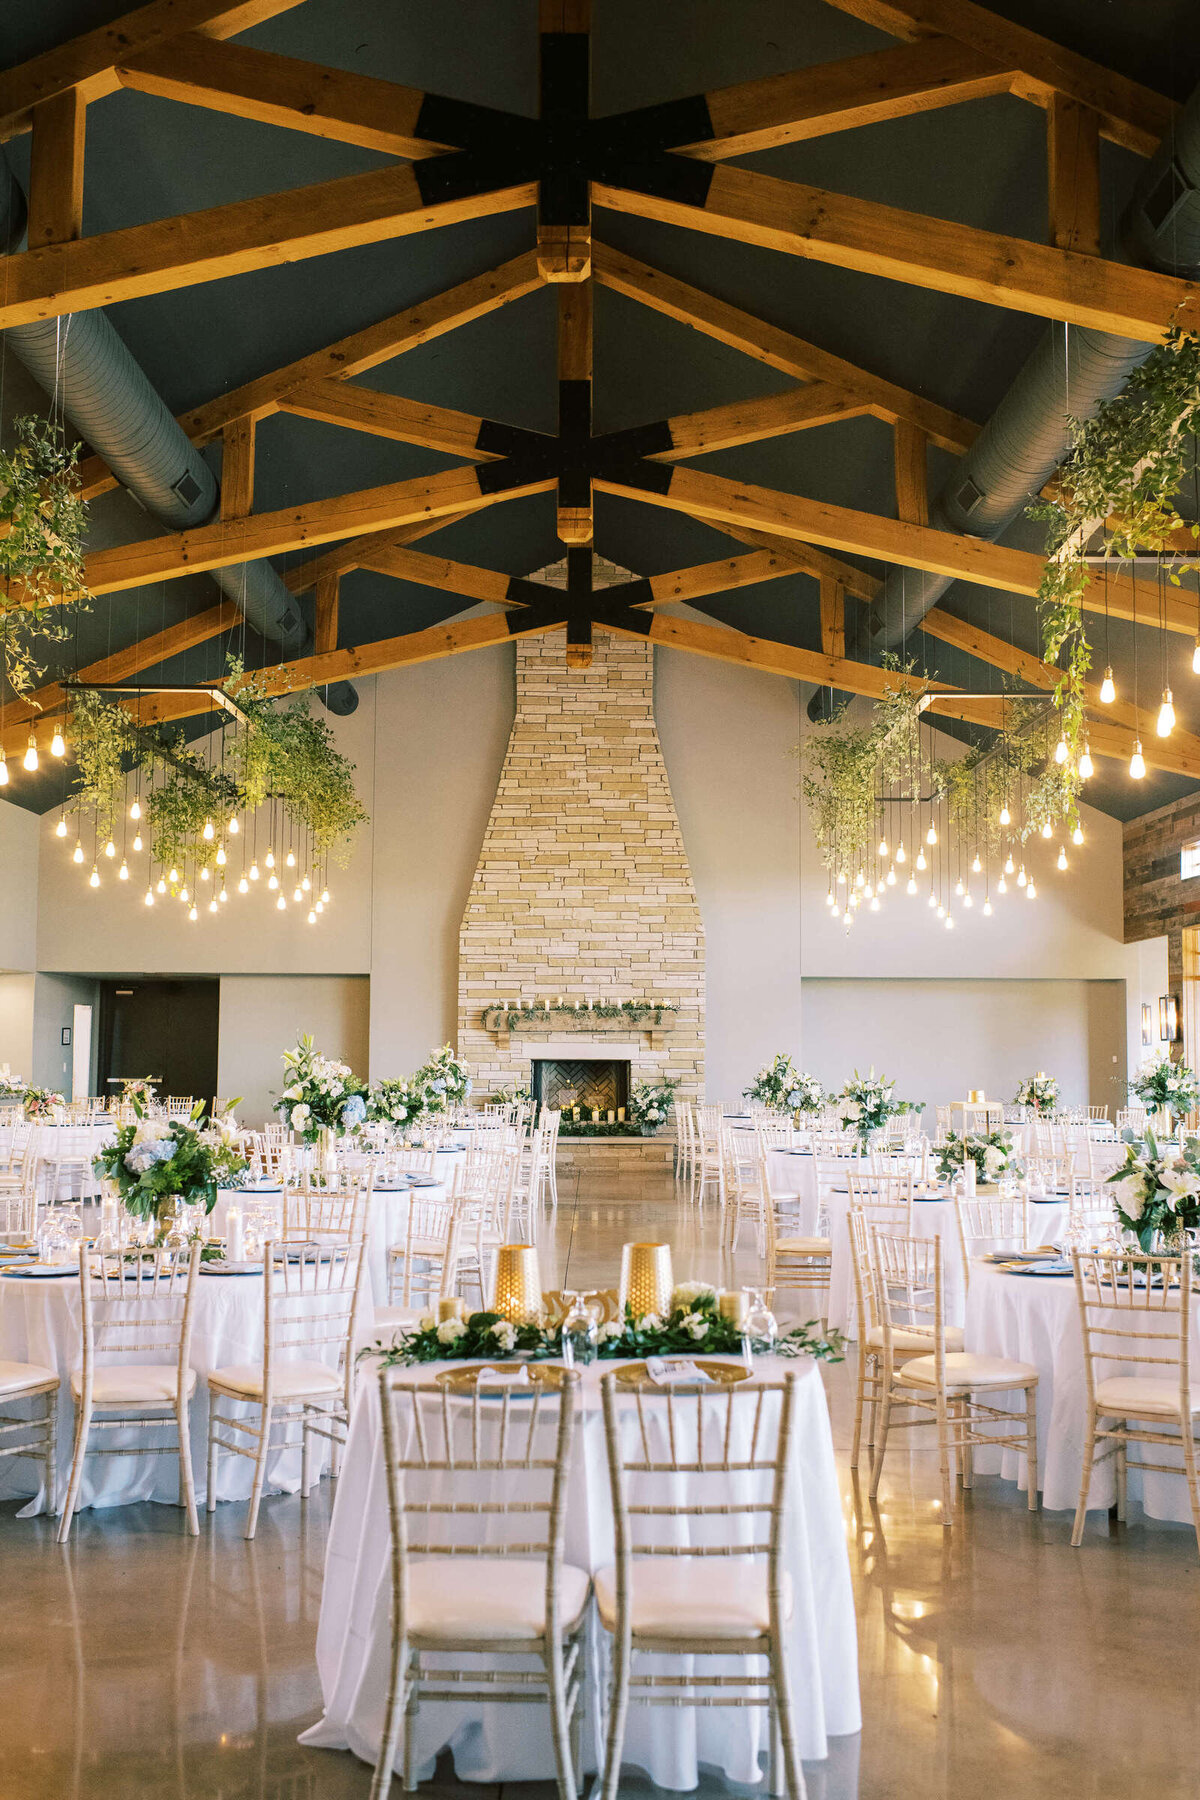 Intimate indoor wedding reception at Canyonwood Ridge venue in Texas